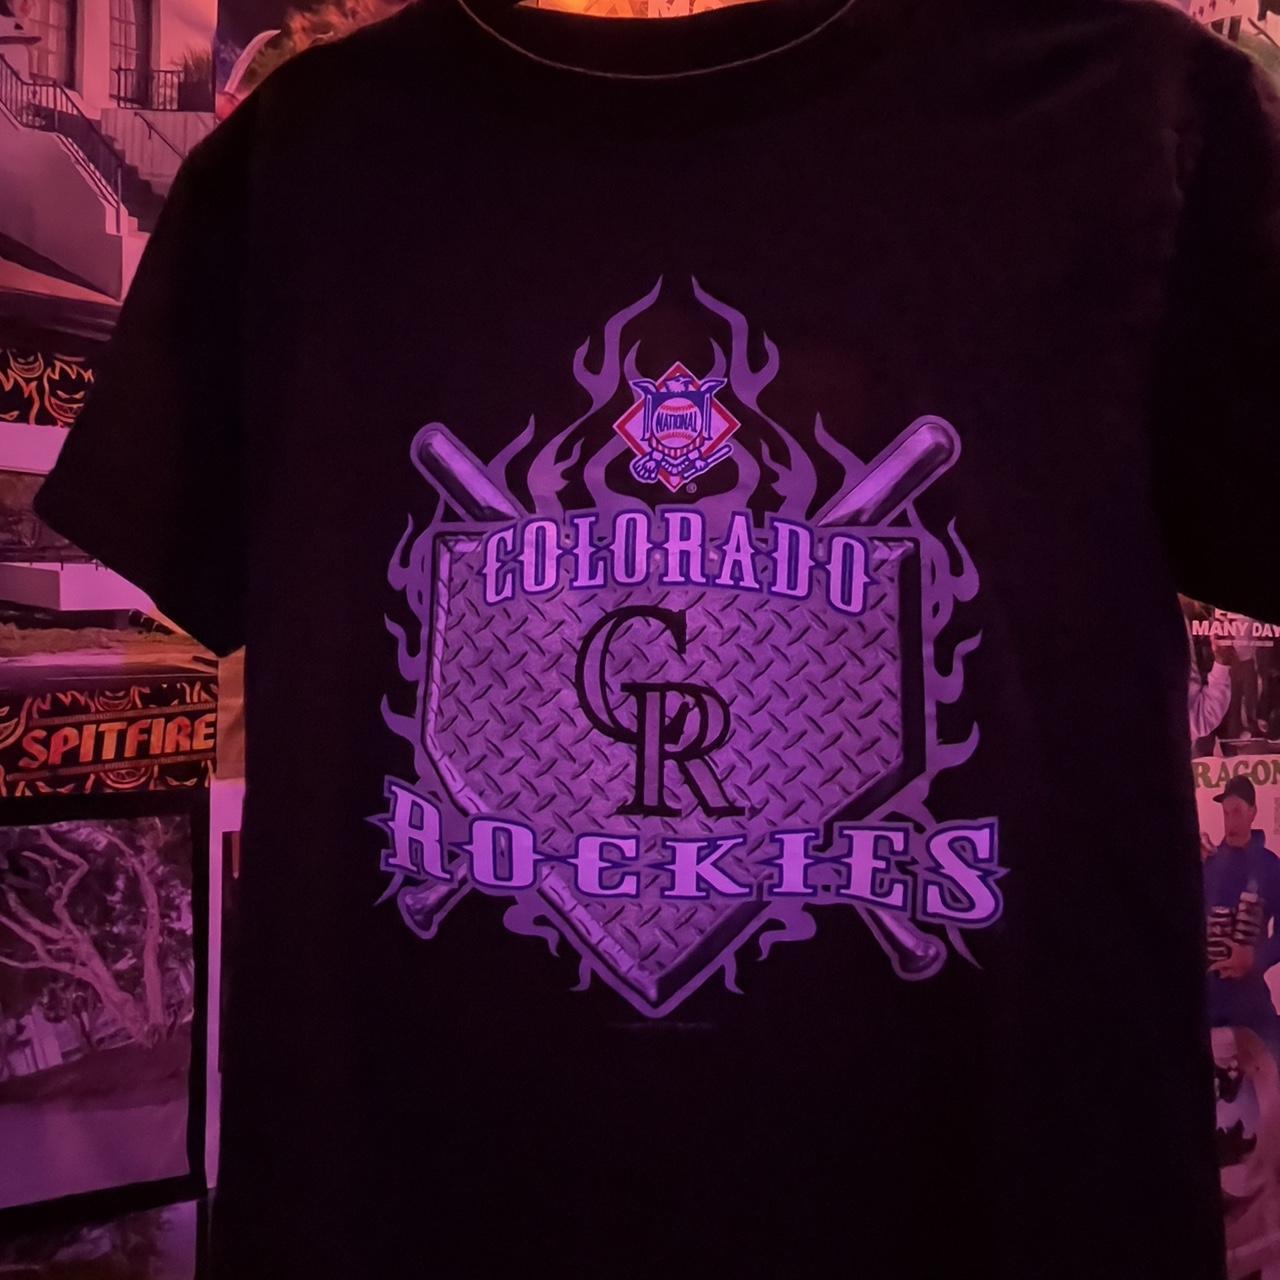 Rockies Men's T-Shirt - Purple - M